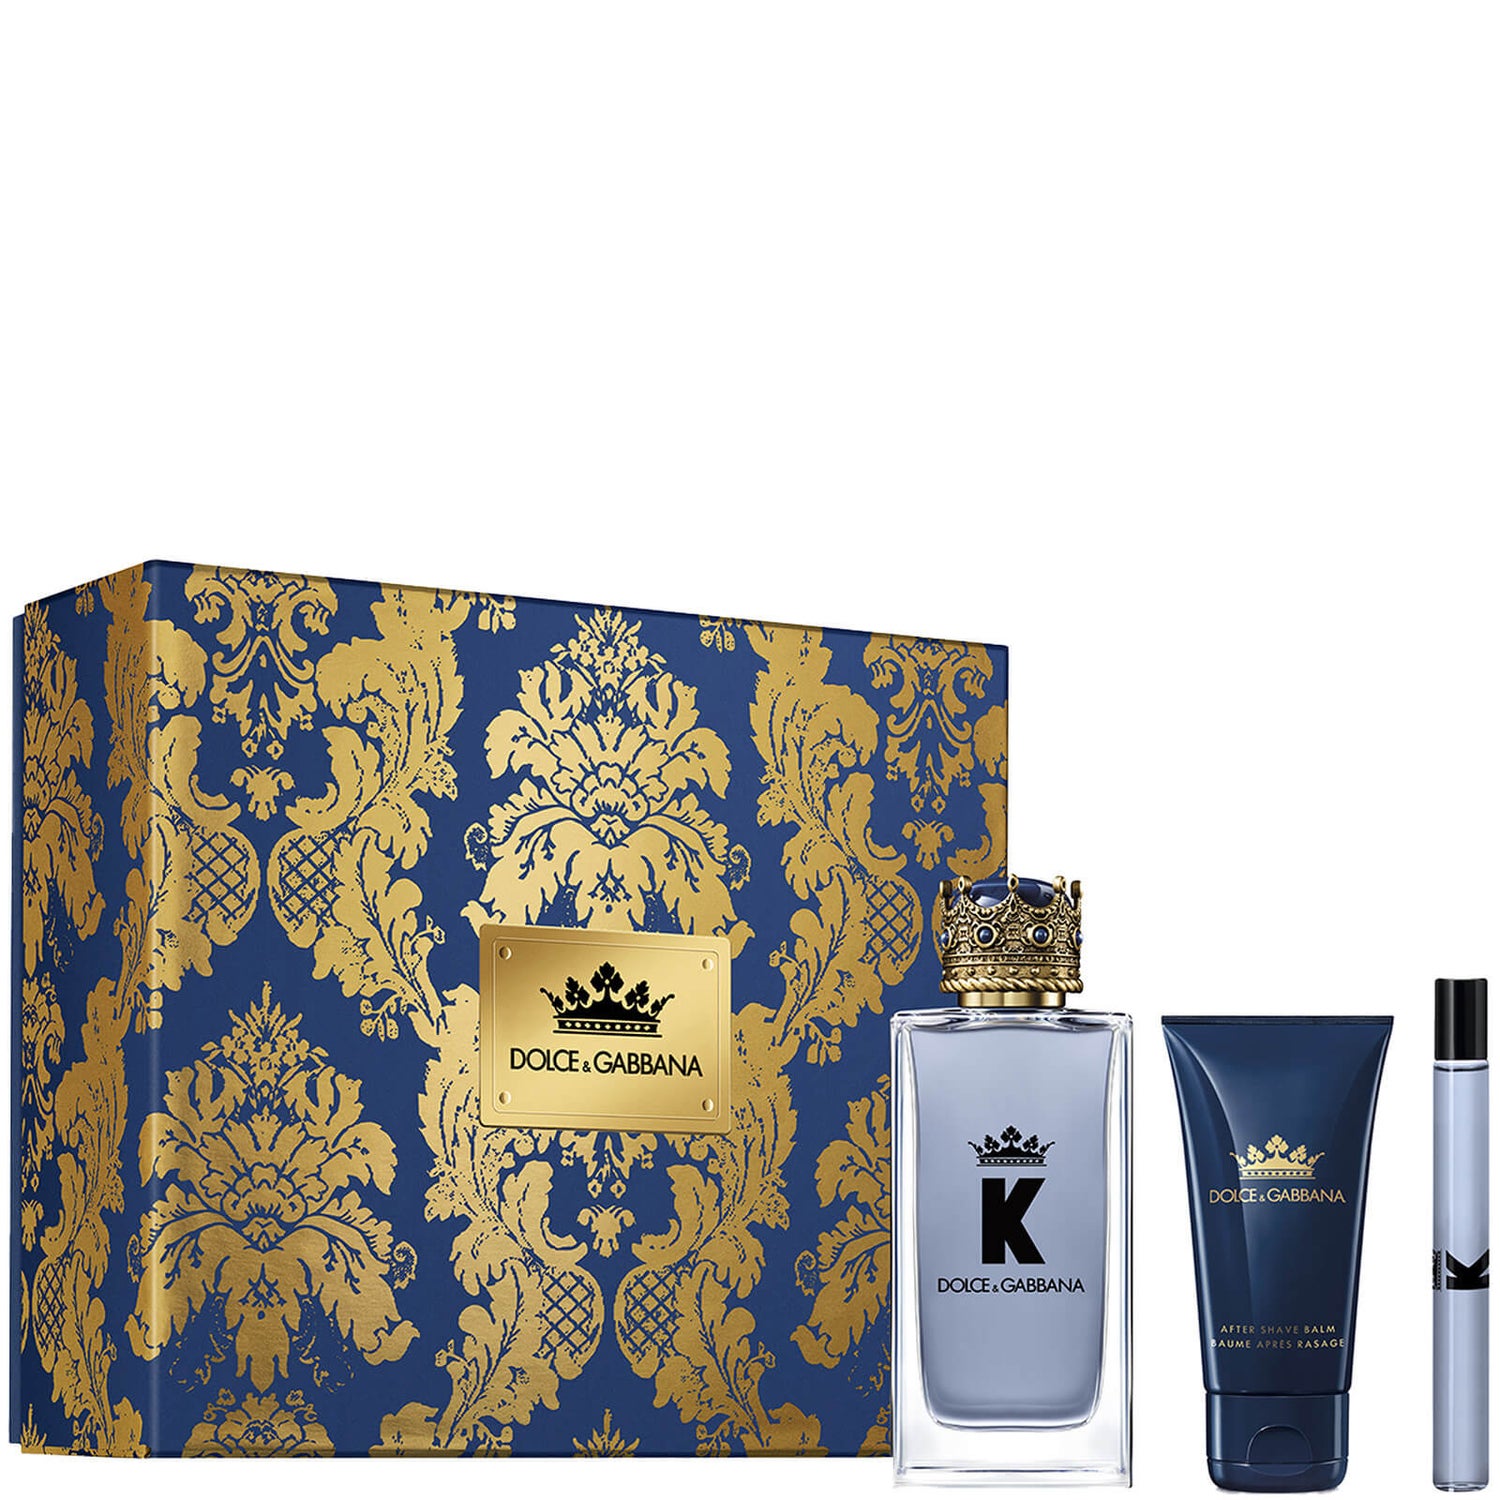 Set de Agua de Colonia Dolce&Gabbana Exclusive K - 100ml